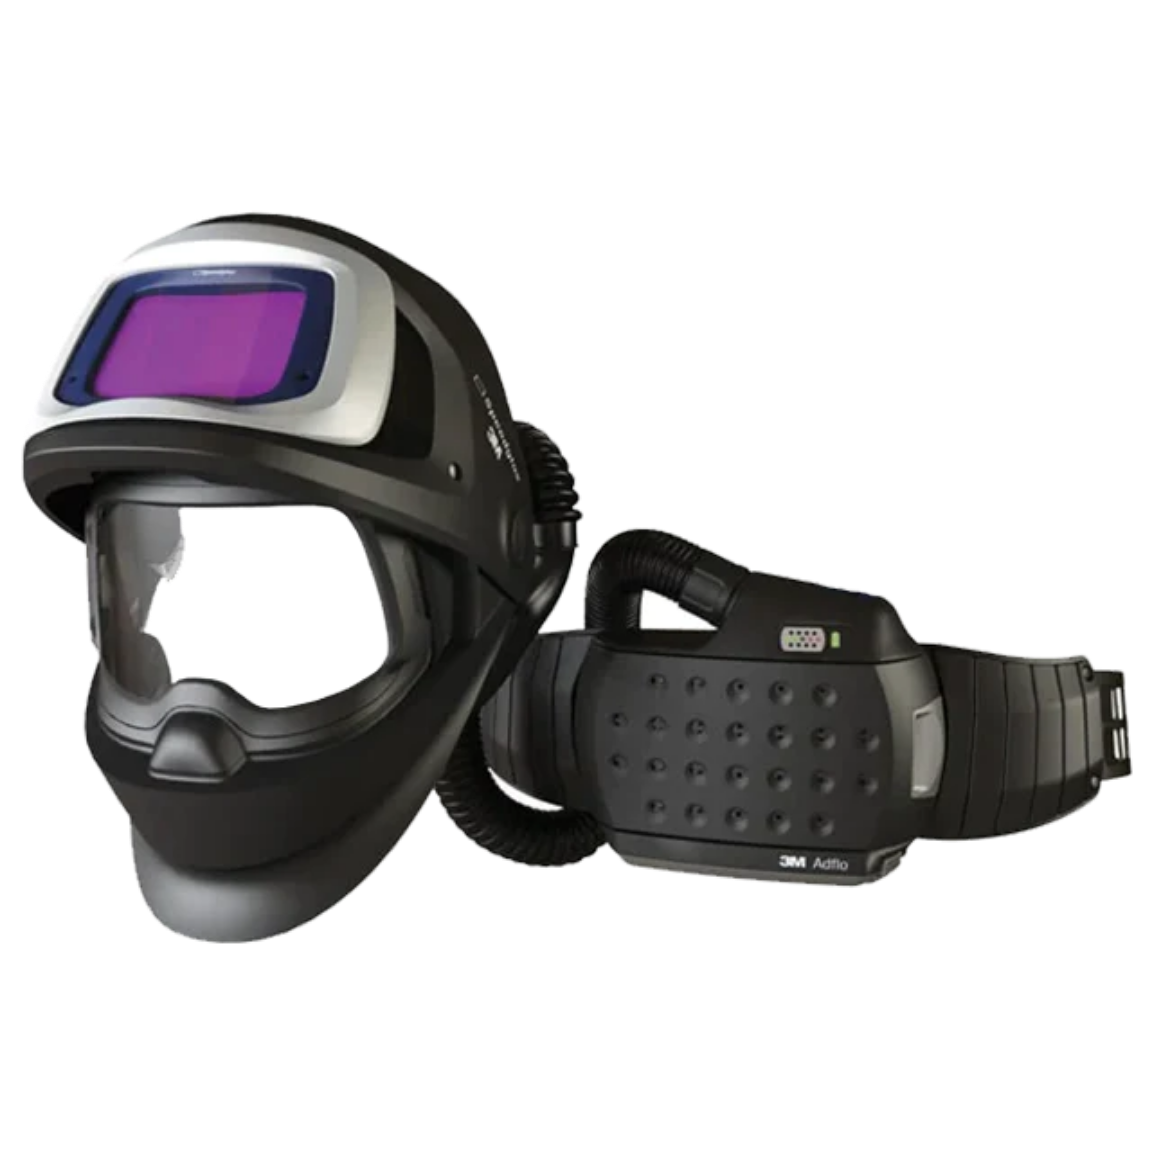 Picture of 3M Speedglas Flip-Up Welding Helmet 9100XXi FX Air with Heavy Duty Adflo PAPR